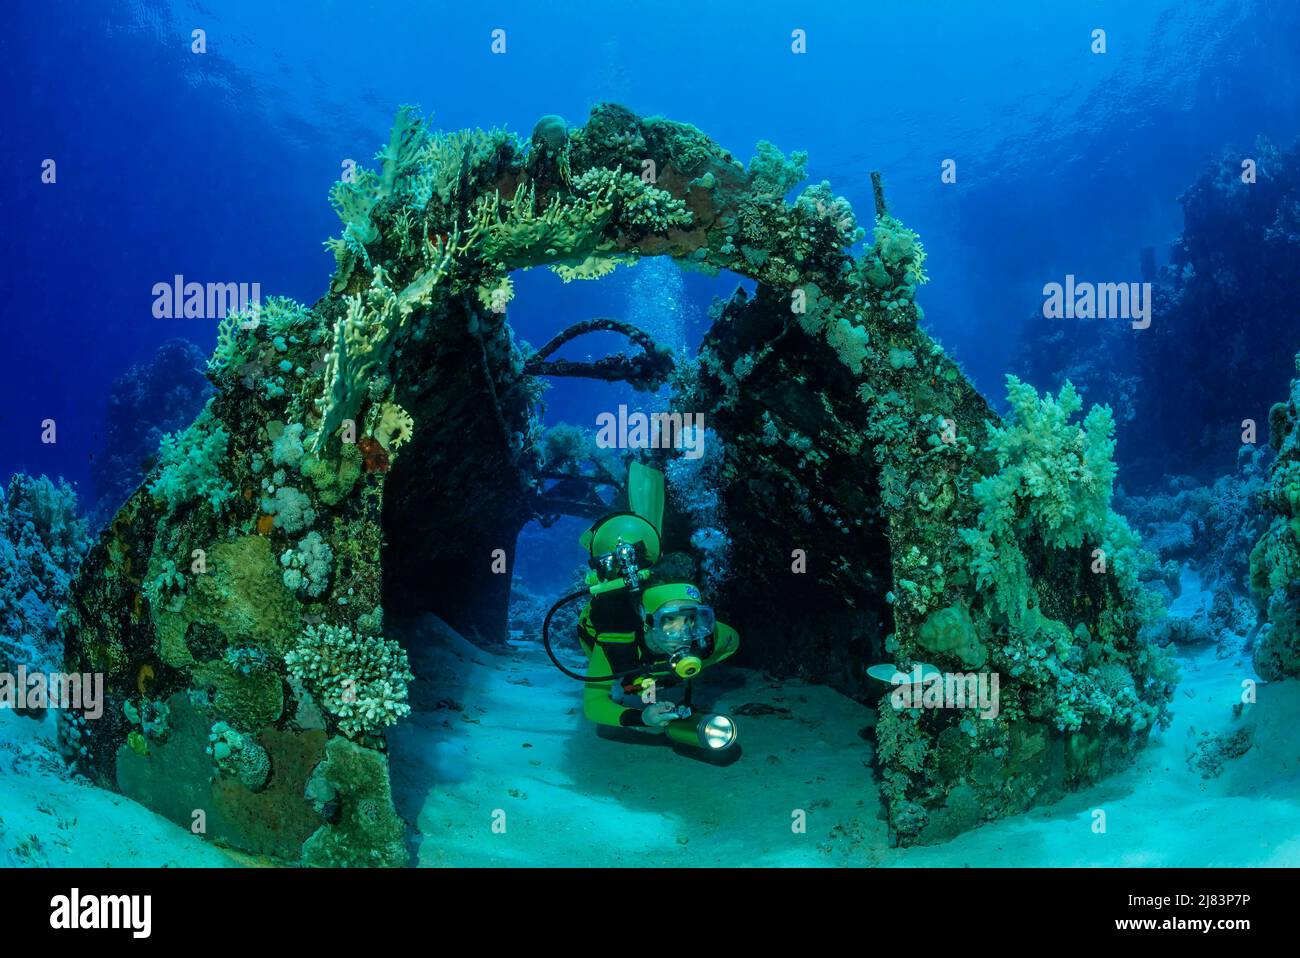 Taucherin im Geraeteschuppen der Unterwassersiedlung von Jacques Yves Cousteau, Precontinent II, Rotes Meer, Shab Rumi, Soudan Banque D'Images